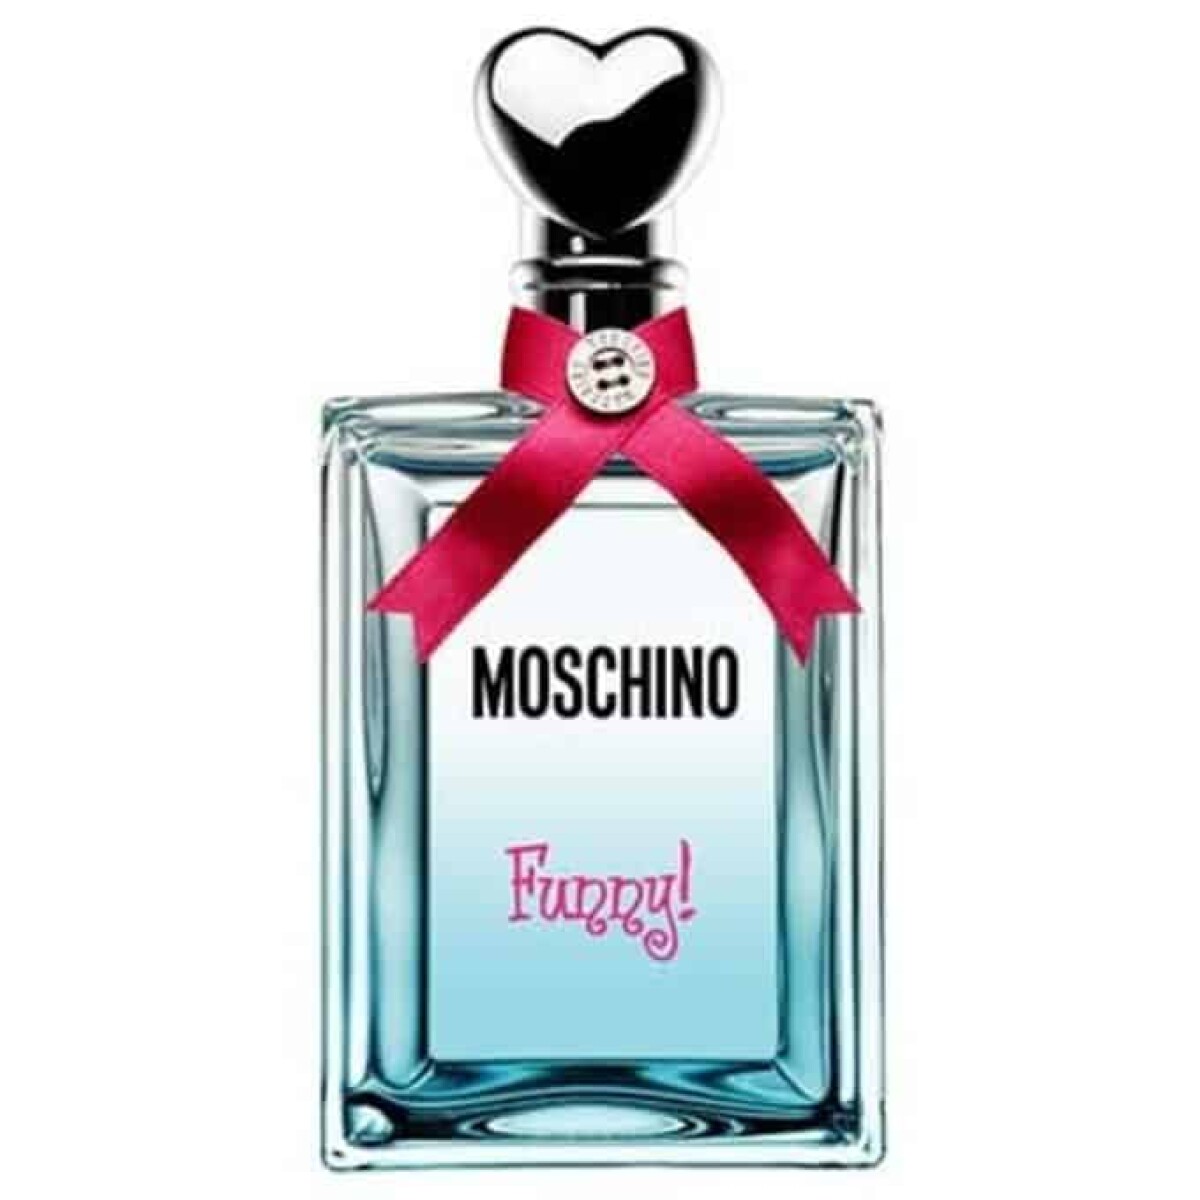 Perfume Moschino Funny! Edt 100 ml 